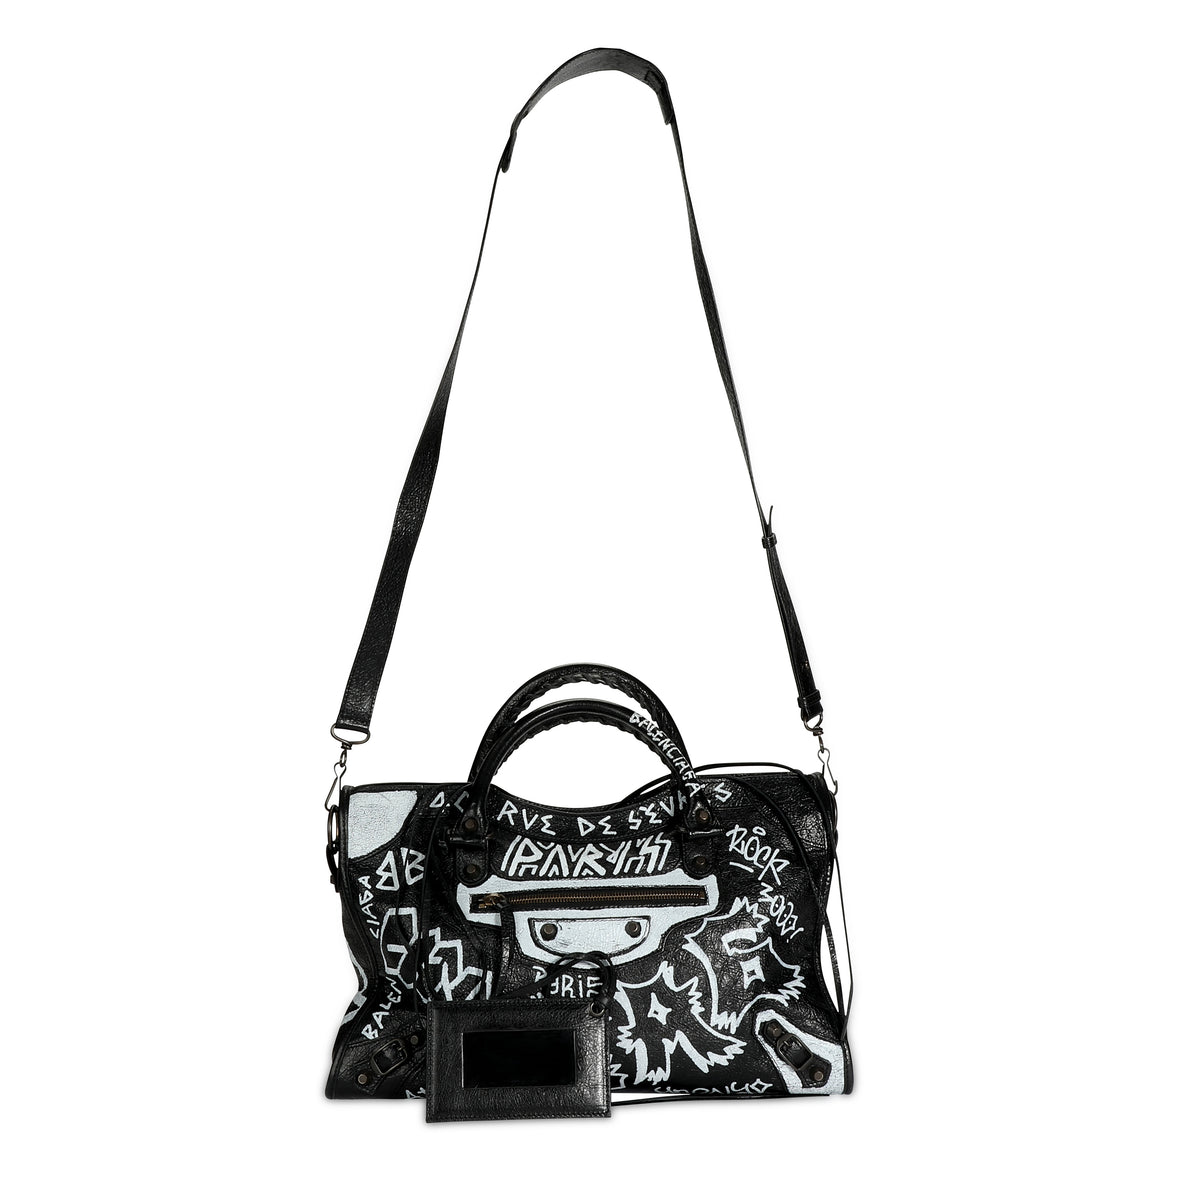 Balenciaga Black & White Graffiti Leather Classic City Bag